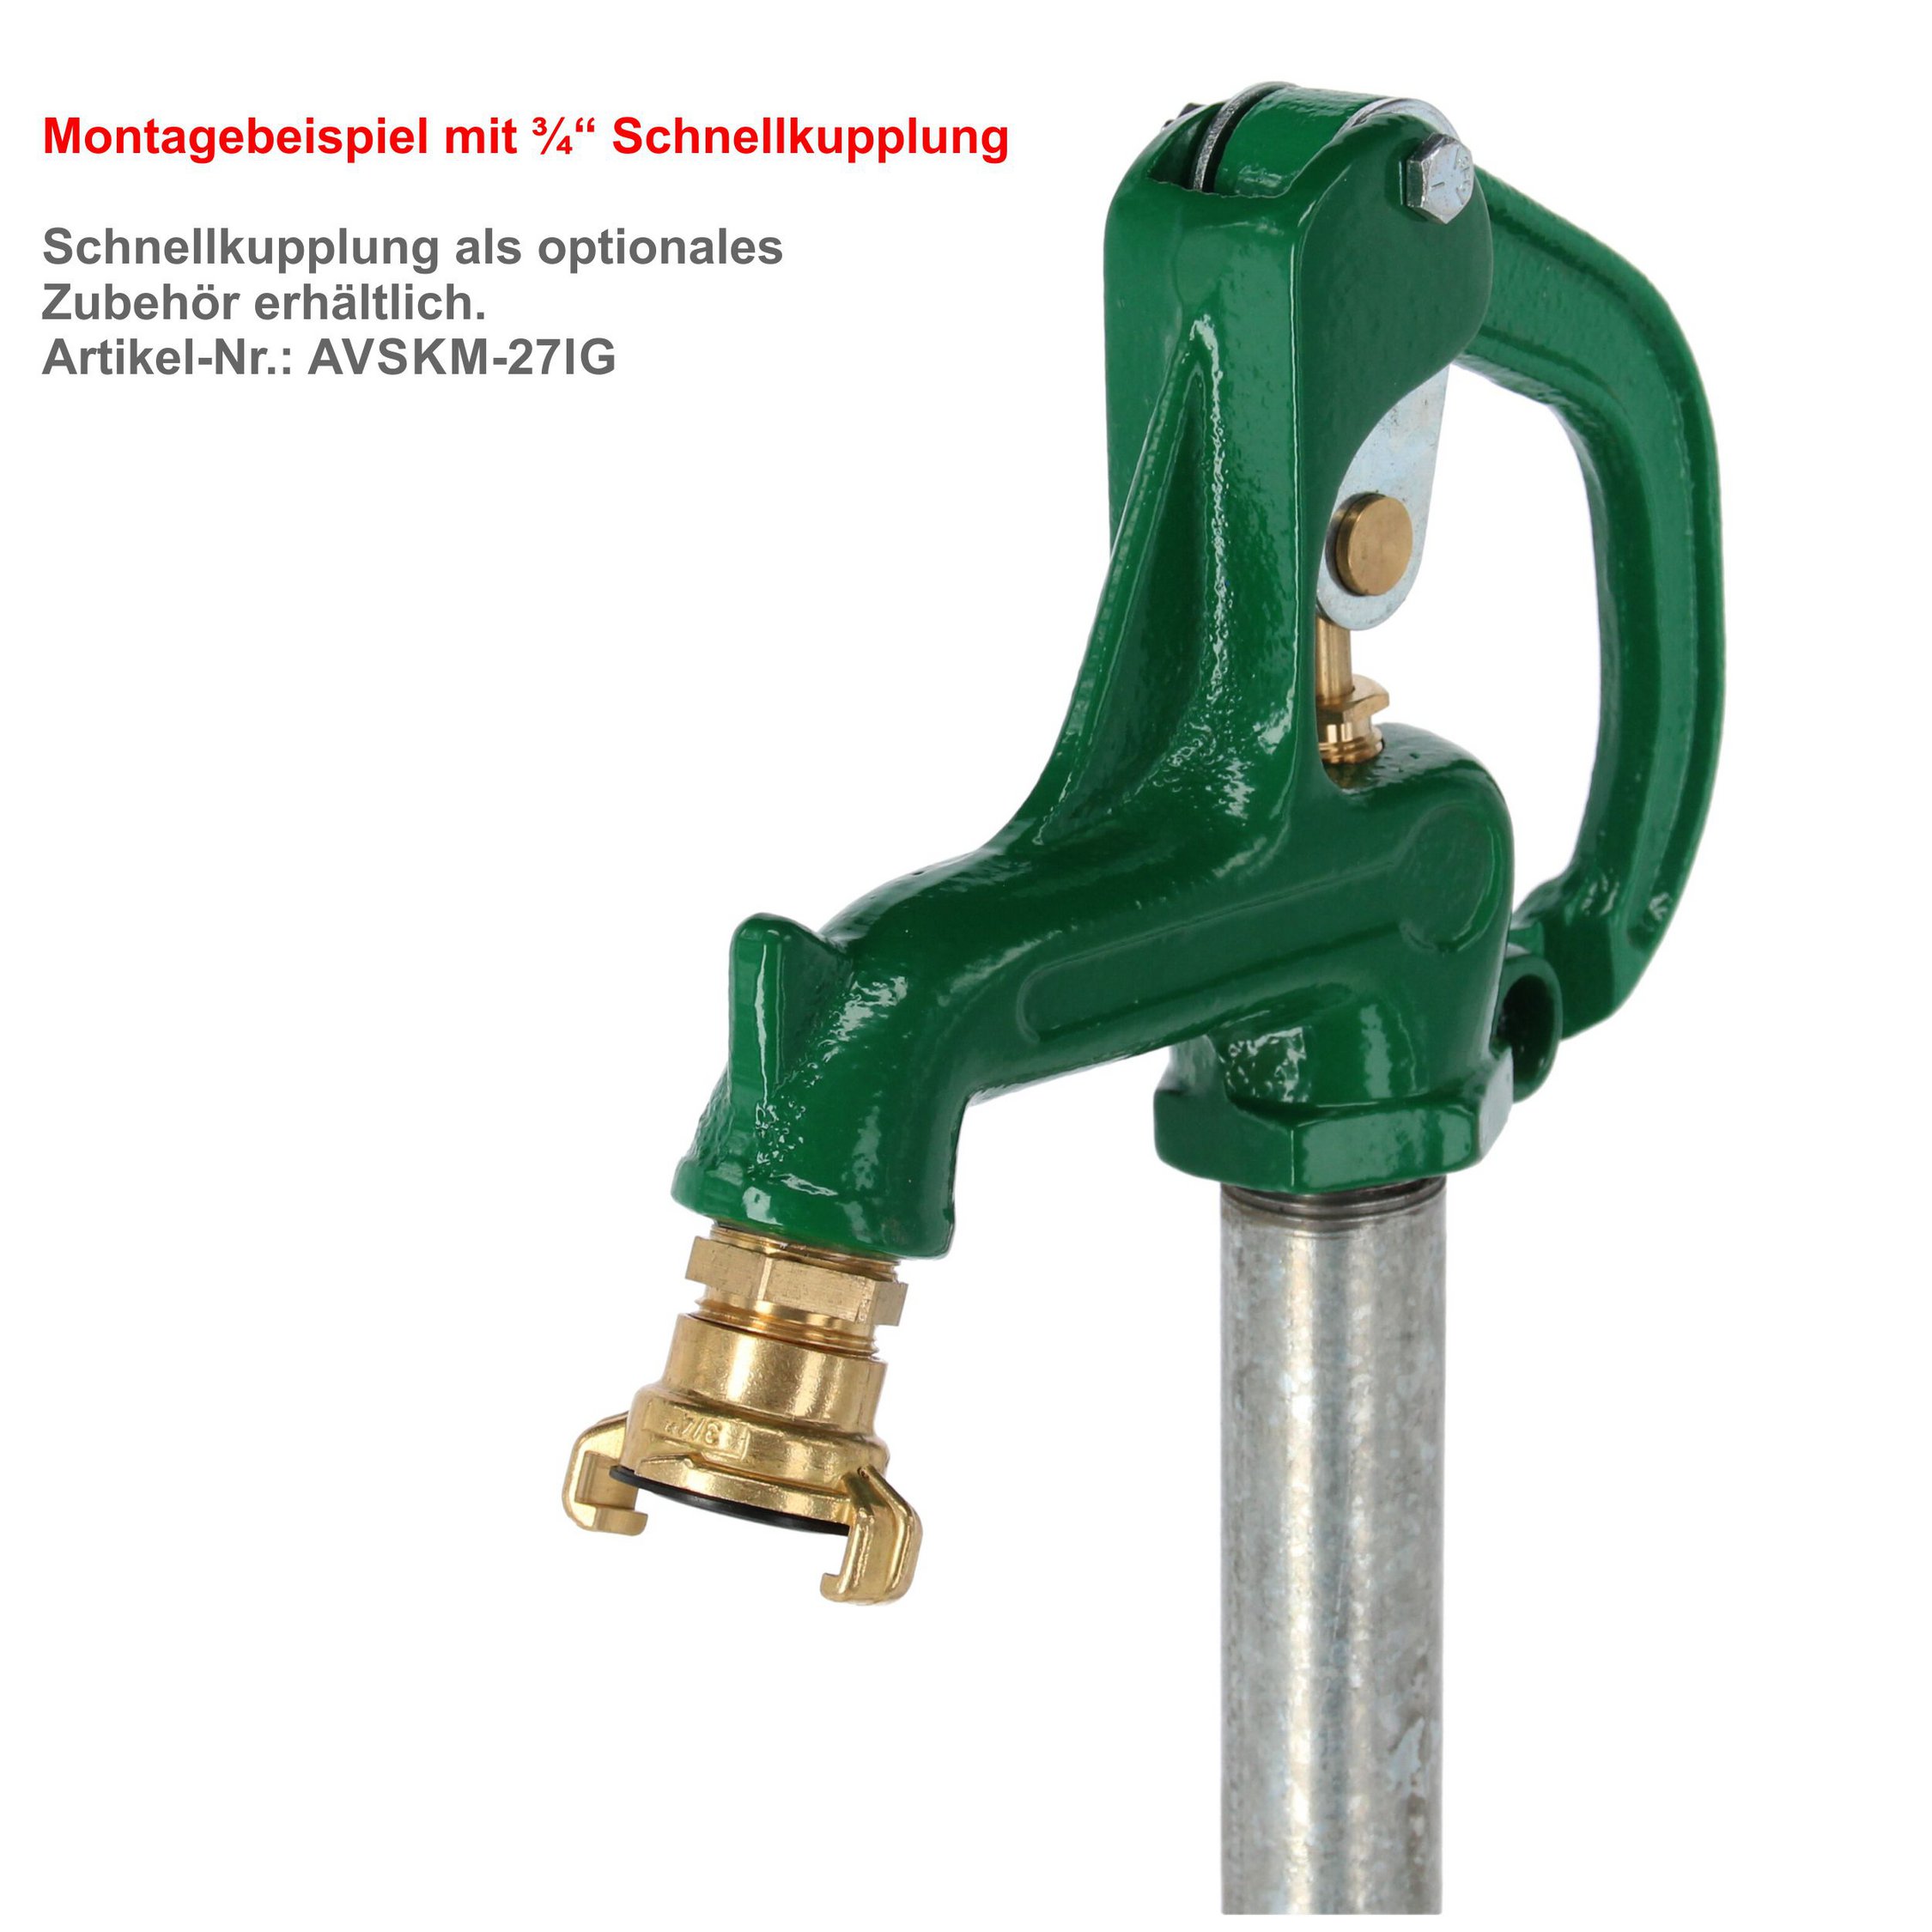 Art.2810 Frostsichere Außenarmatur - E.C.E. Armaturen GmbH, 206,10 €